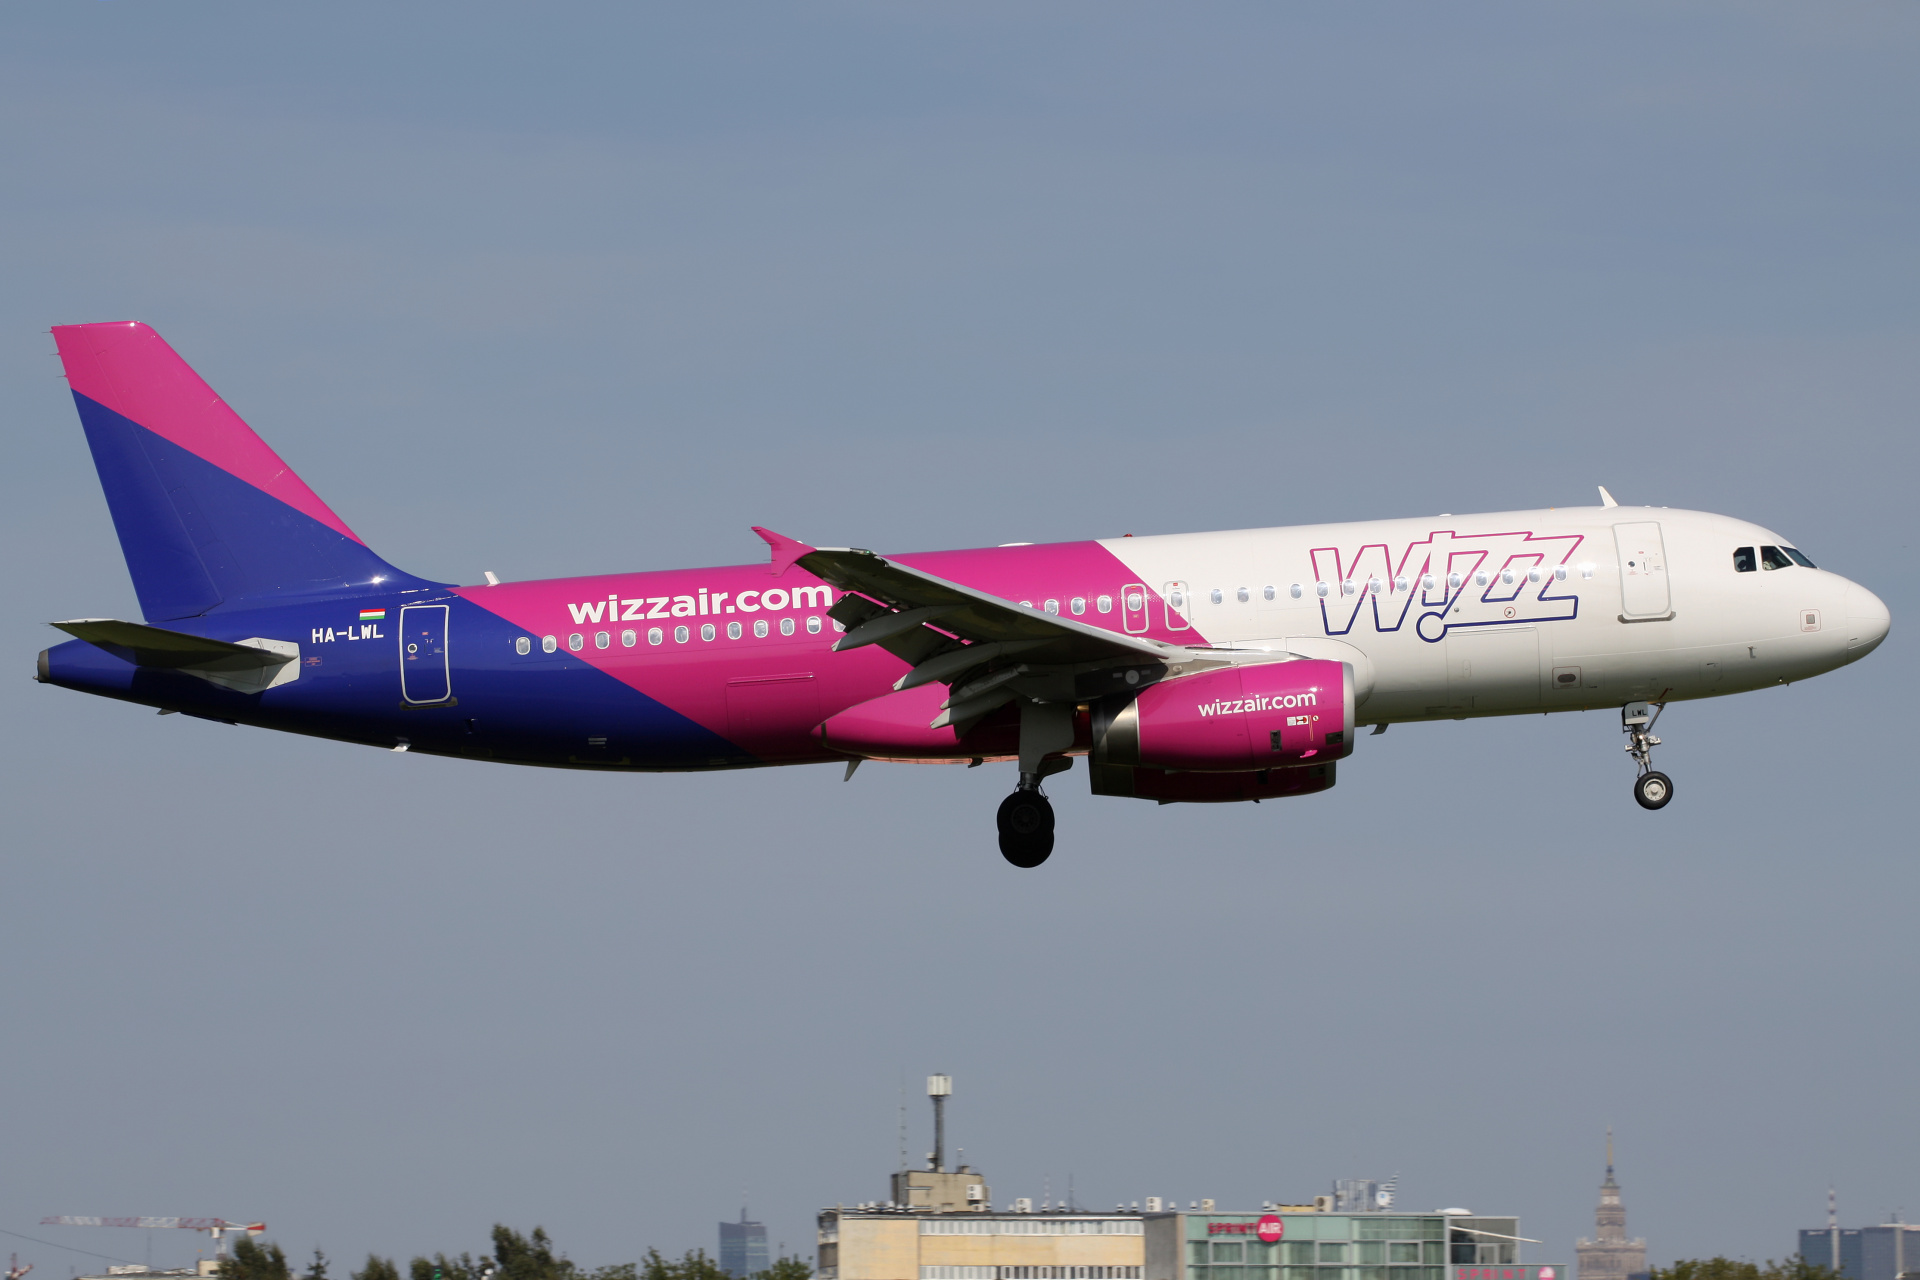 HA-LWL (Aircraft » EPWA Spotting » Airbus A320-200 » Wizz Air)